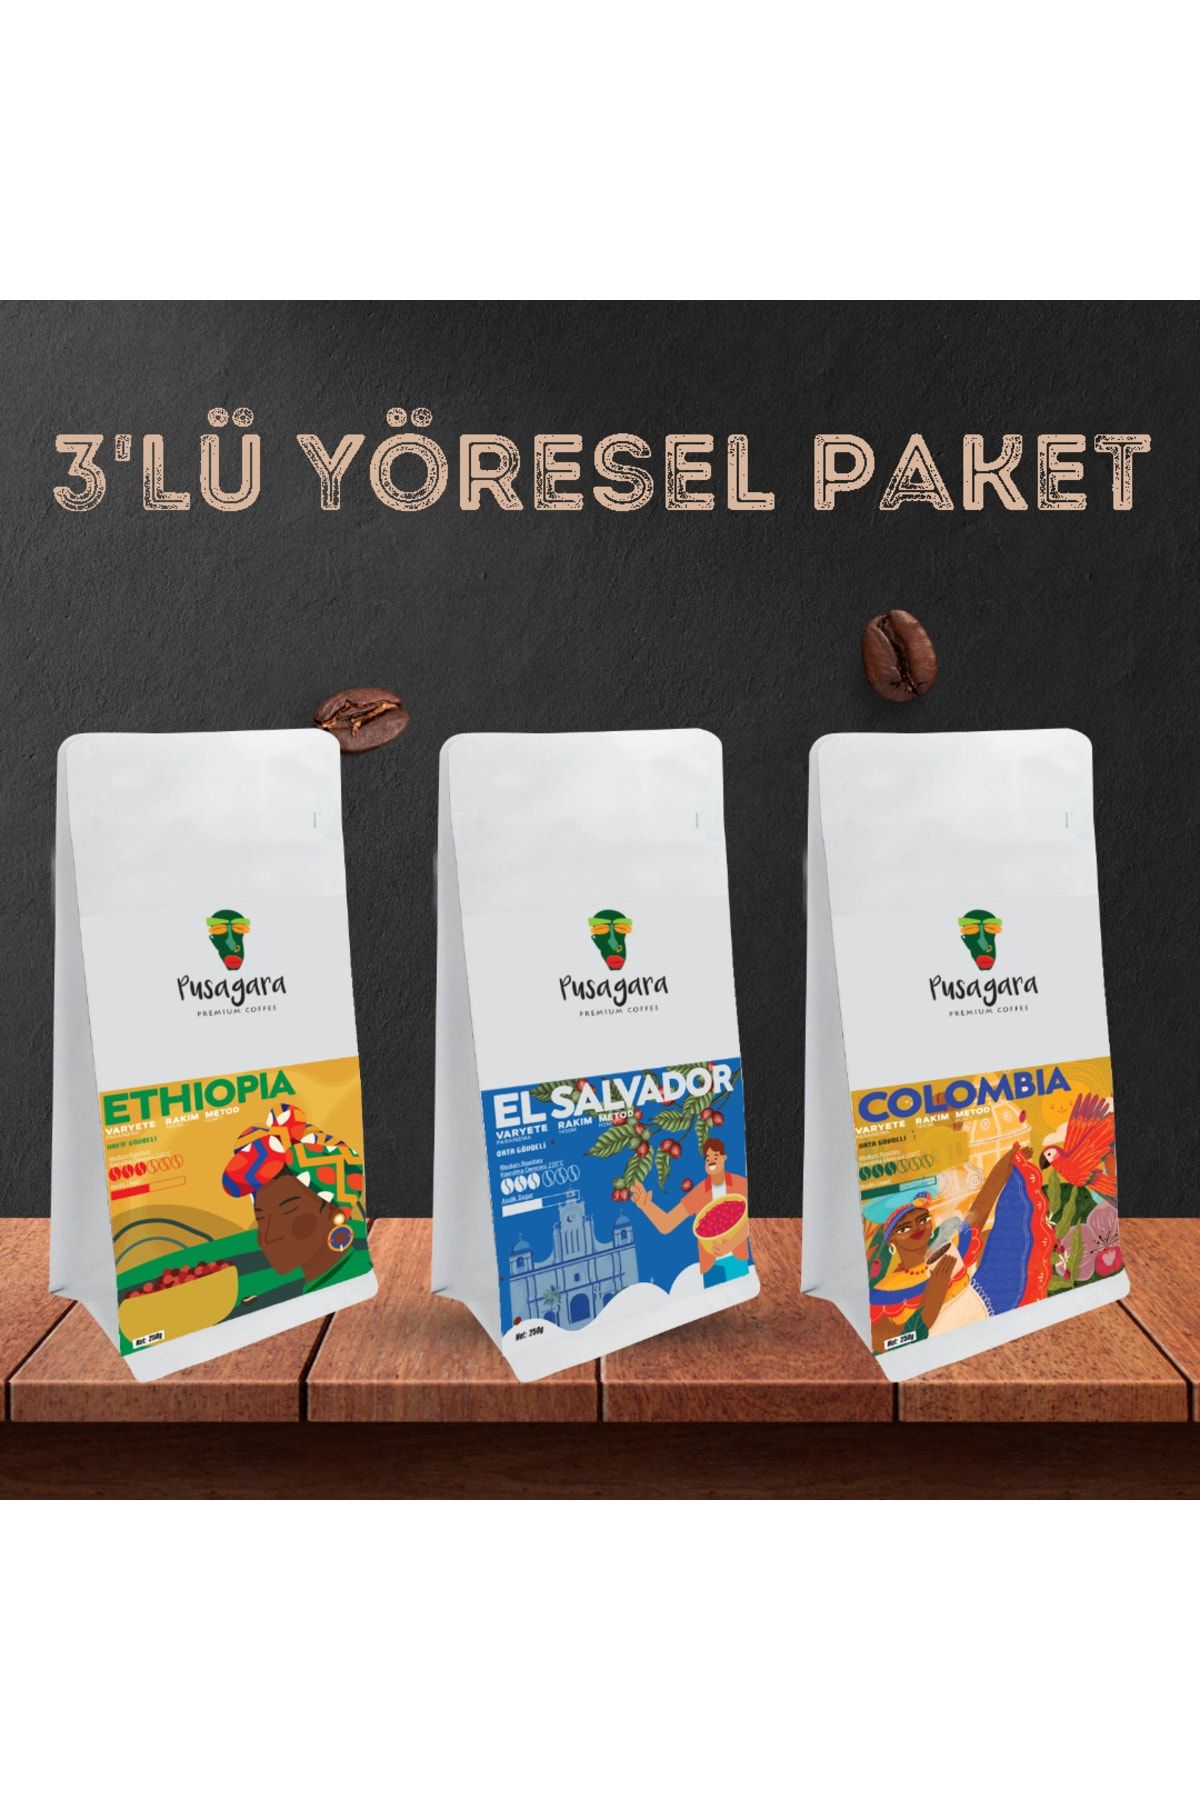 pusagara 3'lü Yöresel Paket Ethiopia- El Salvador- Colombia Filtre Ve Çekirdek Kahve 250g